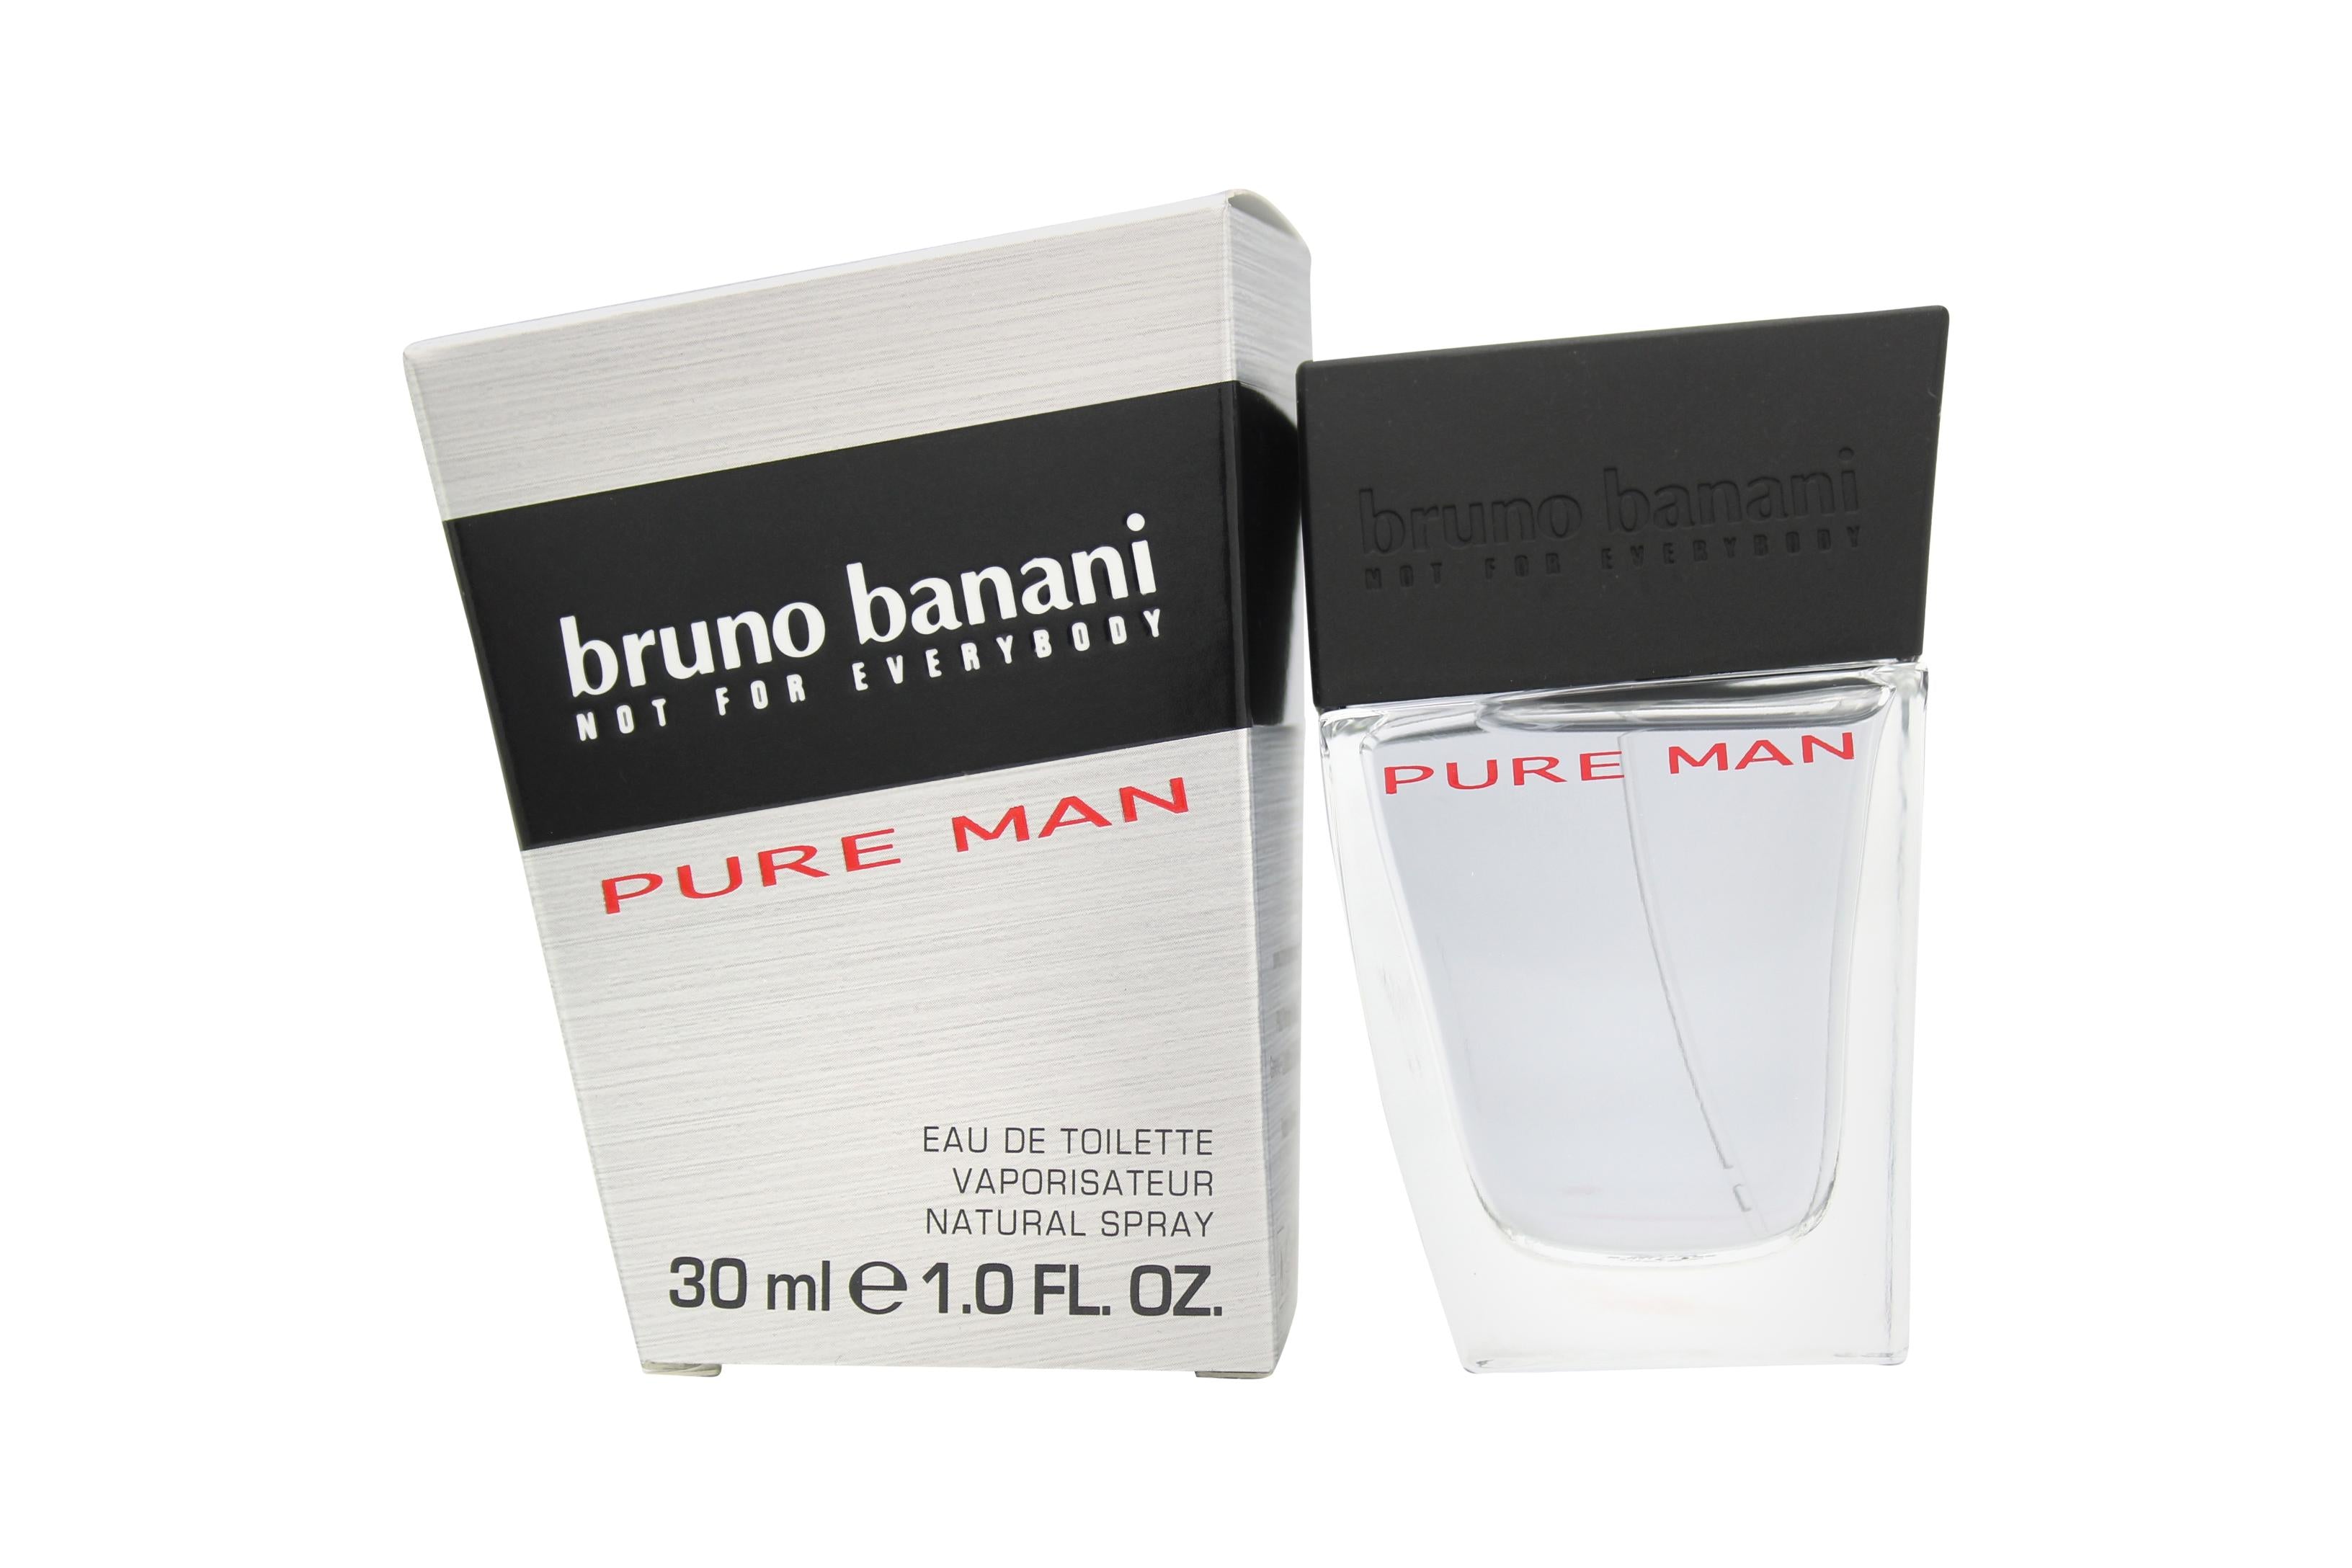 View Bruno Banani Pure Man Eau de Toilette 30ml Spray information